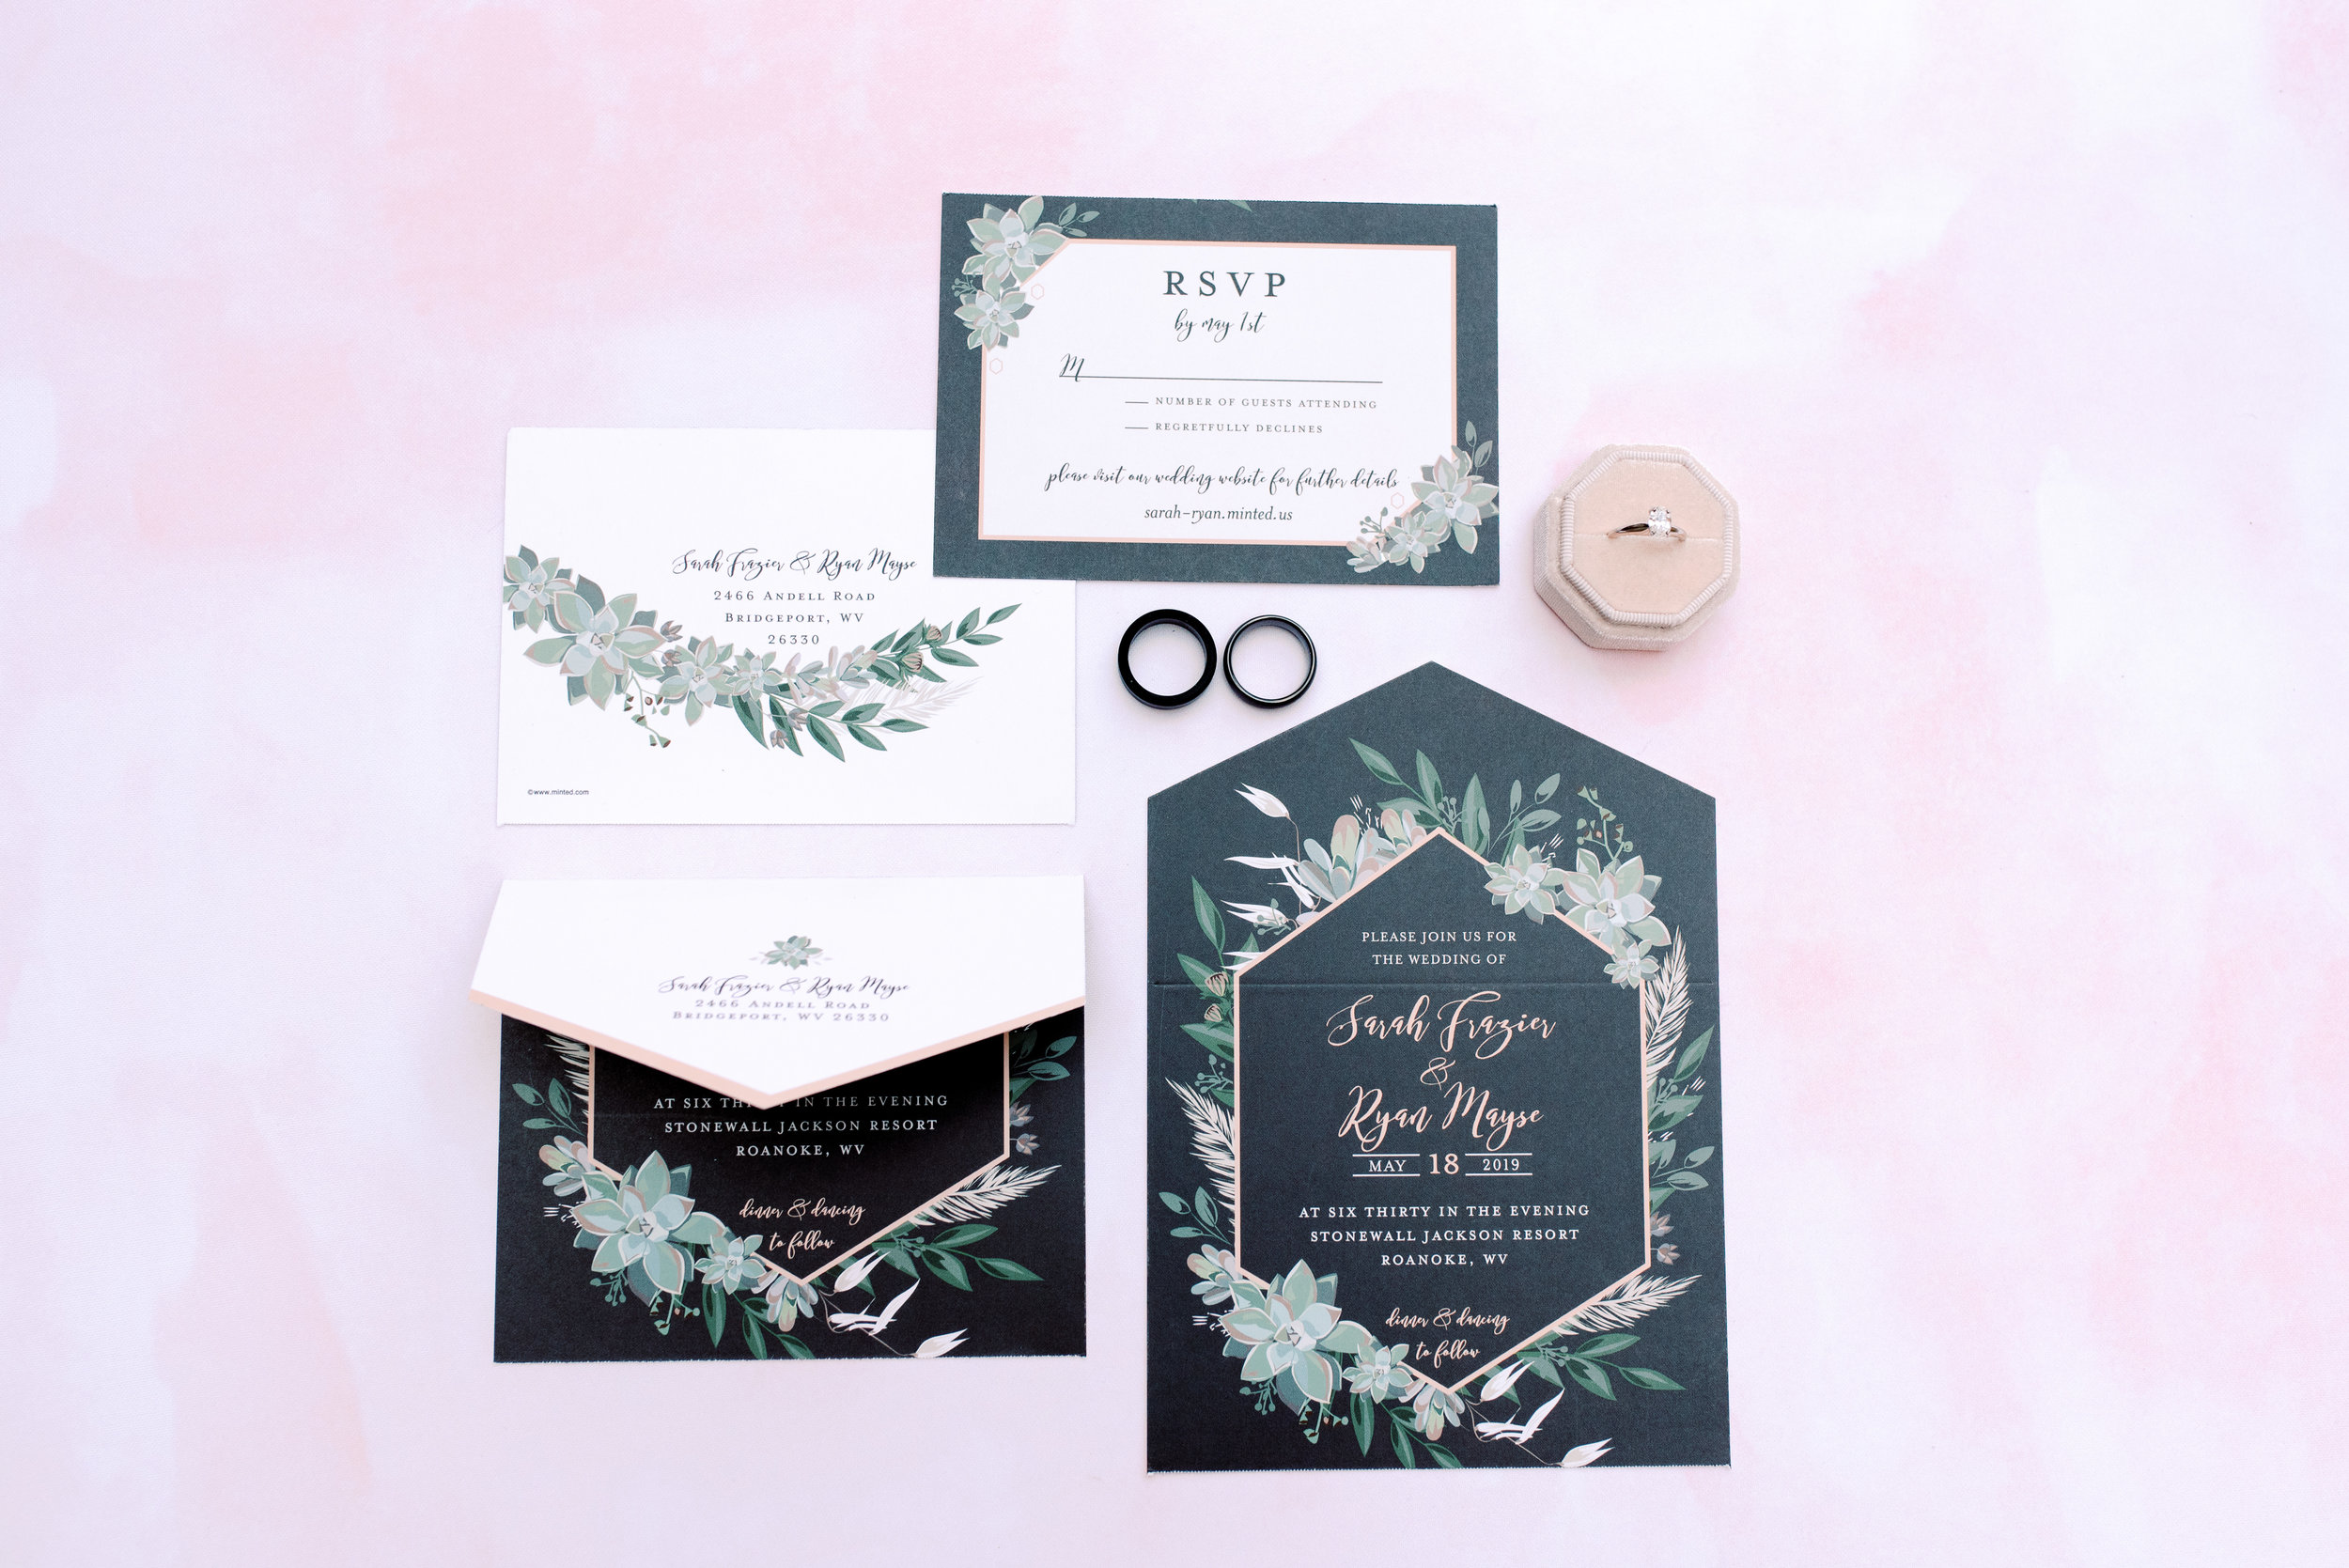 lexington-wedding-photographer-invitations